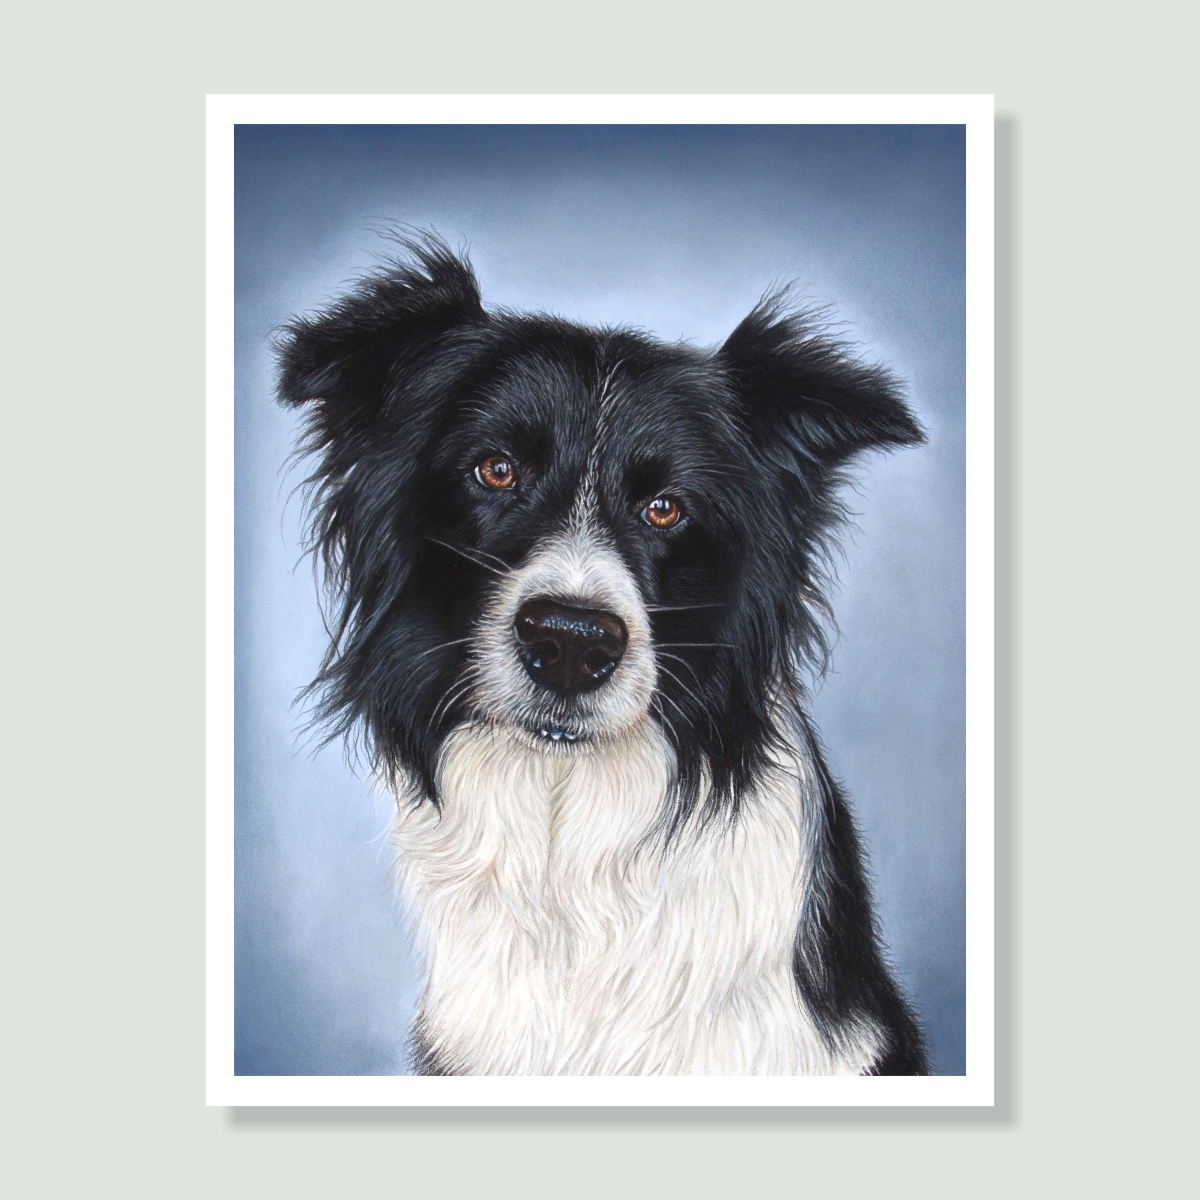 Merlin - coloured pastel Border Collie portrait by pet artist Angie.